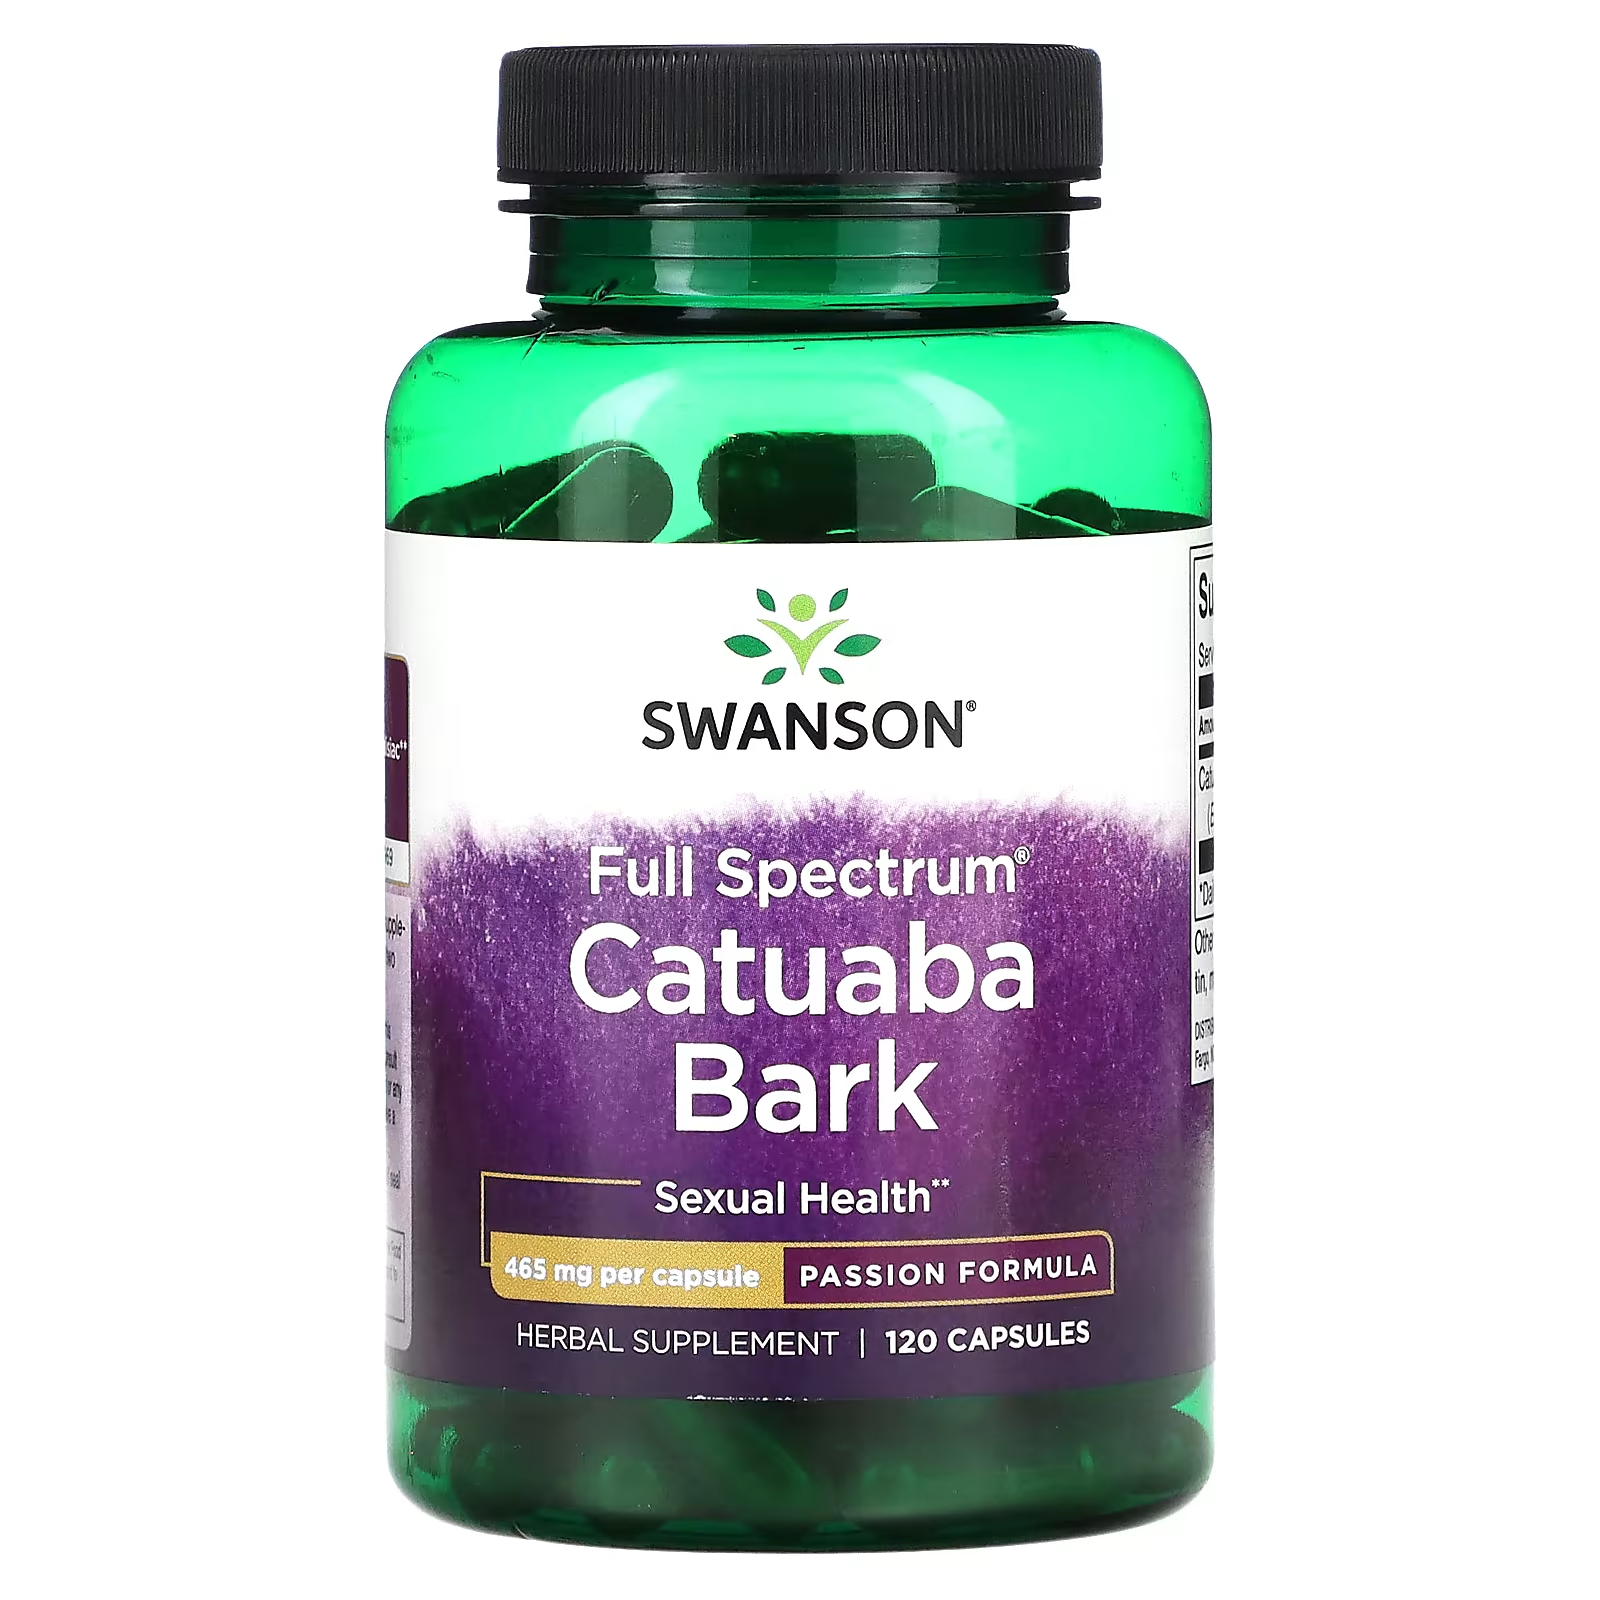 Растительная добавка Swanson Full Spectrum Catuaba Bark 465 мг, 120 капсул